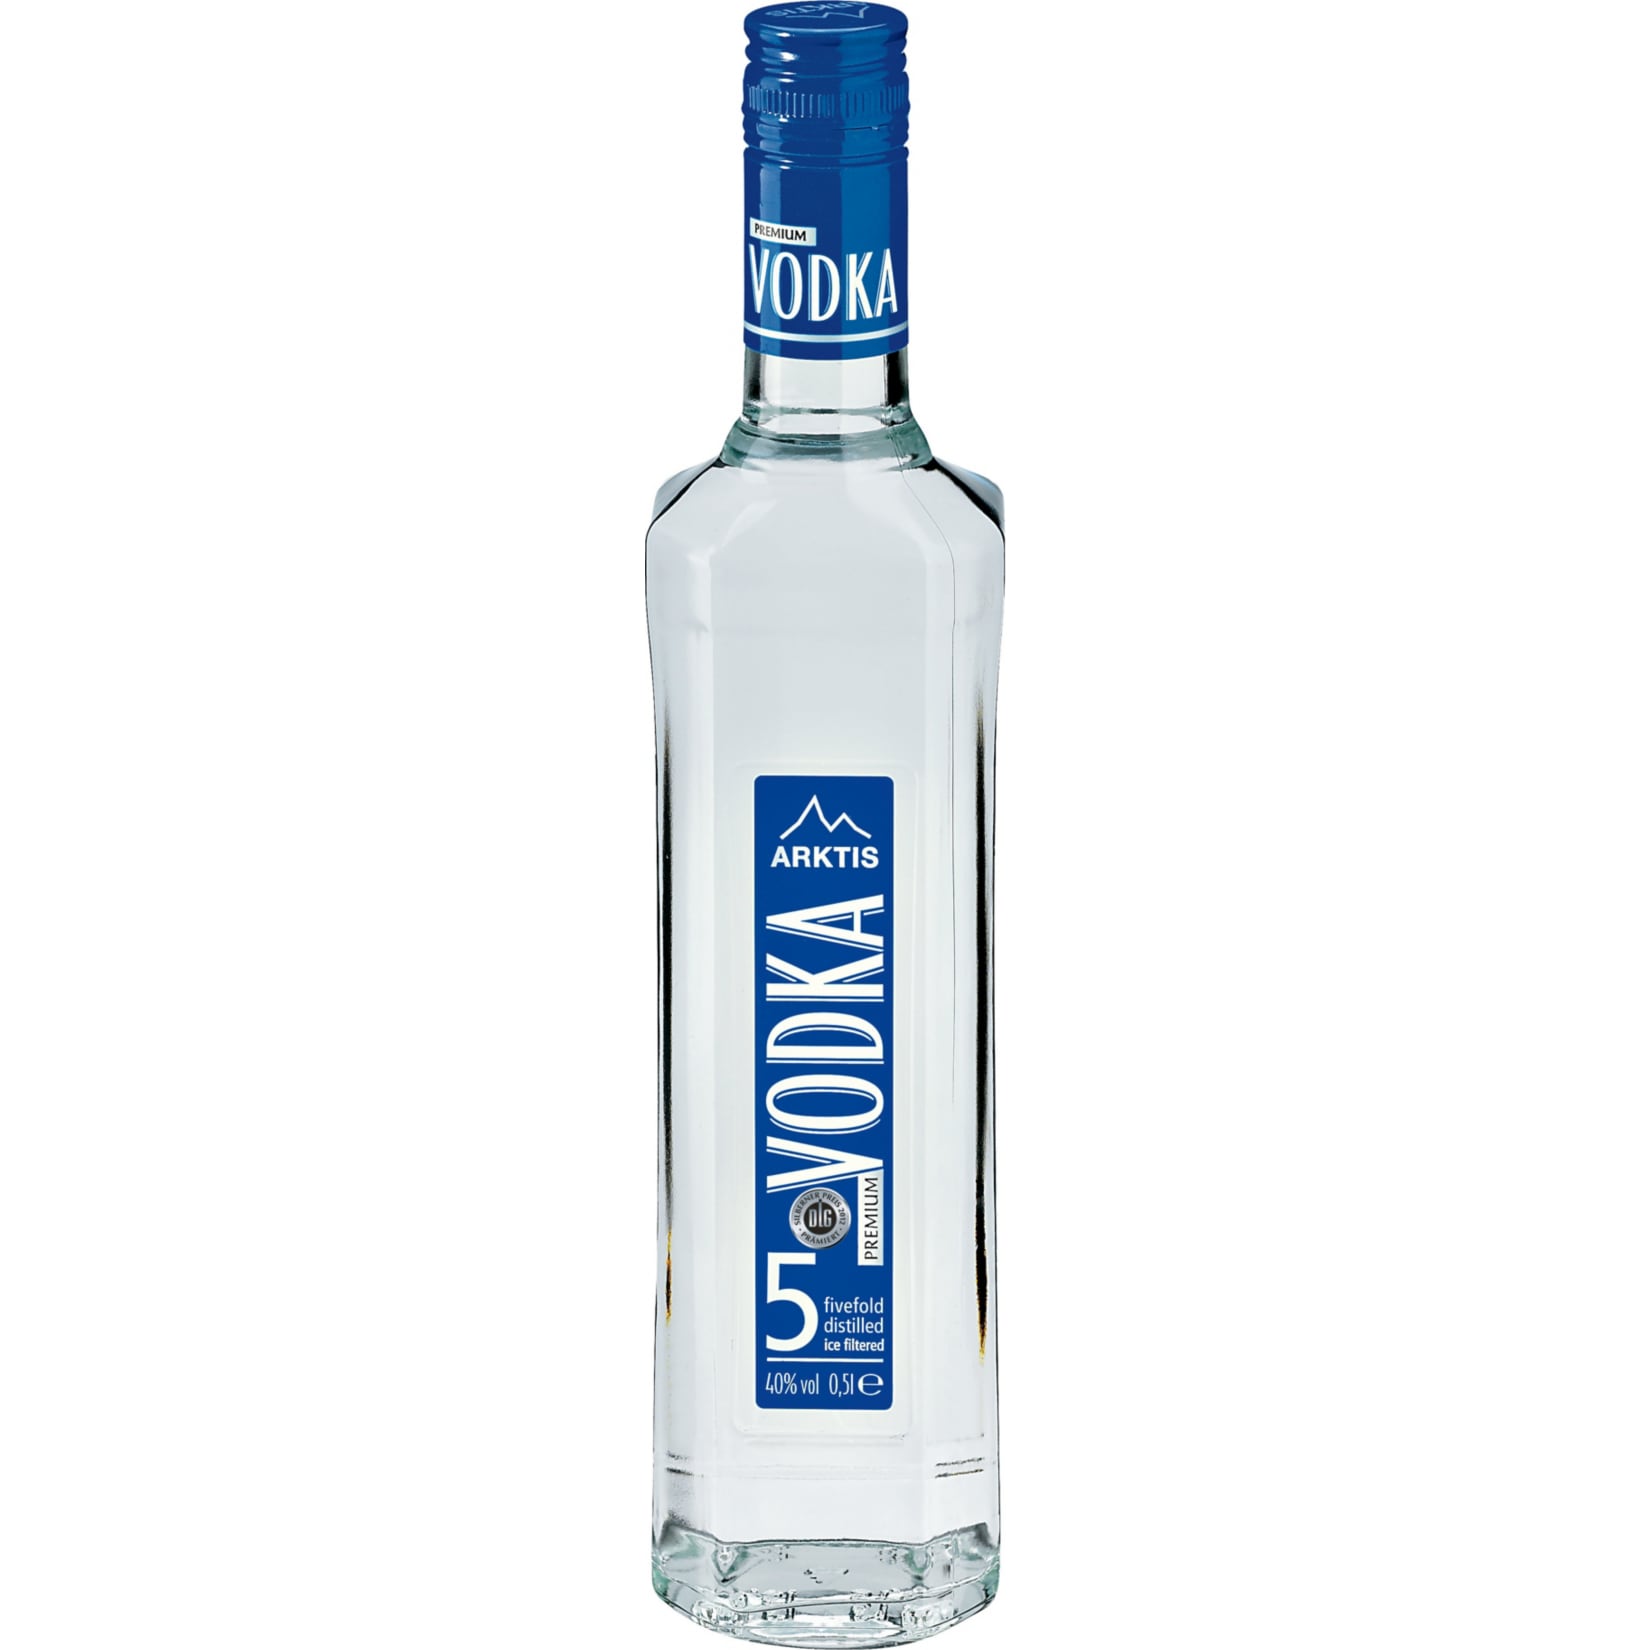 Birken Vodka